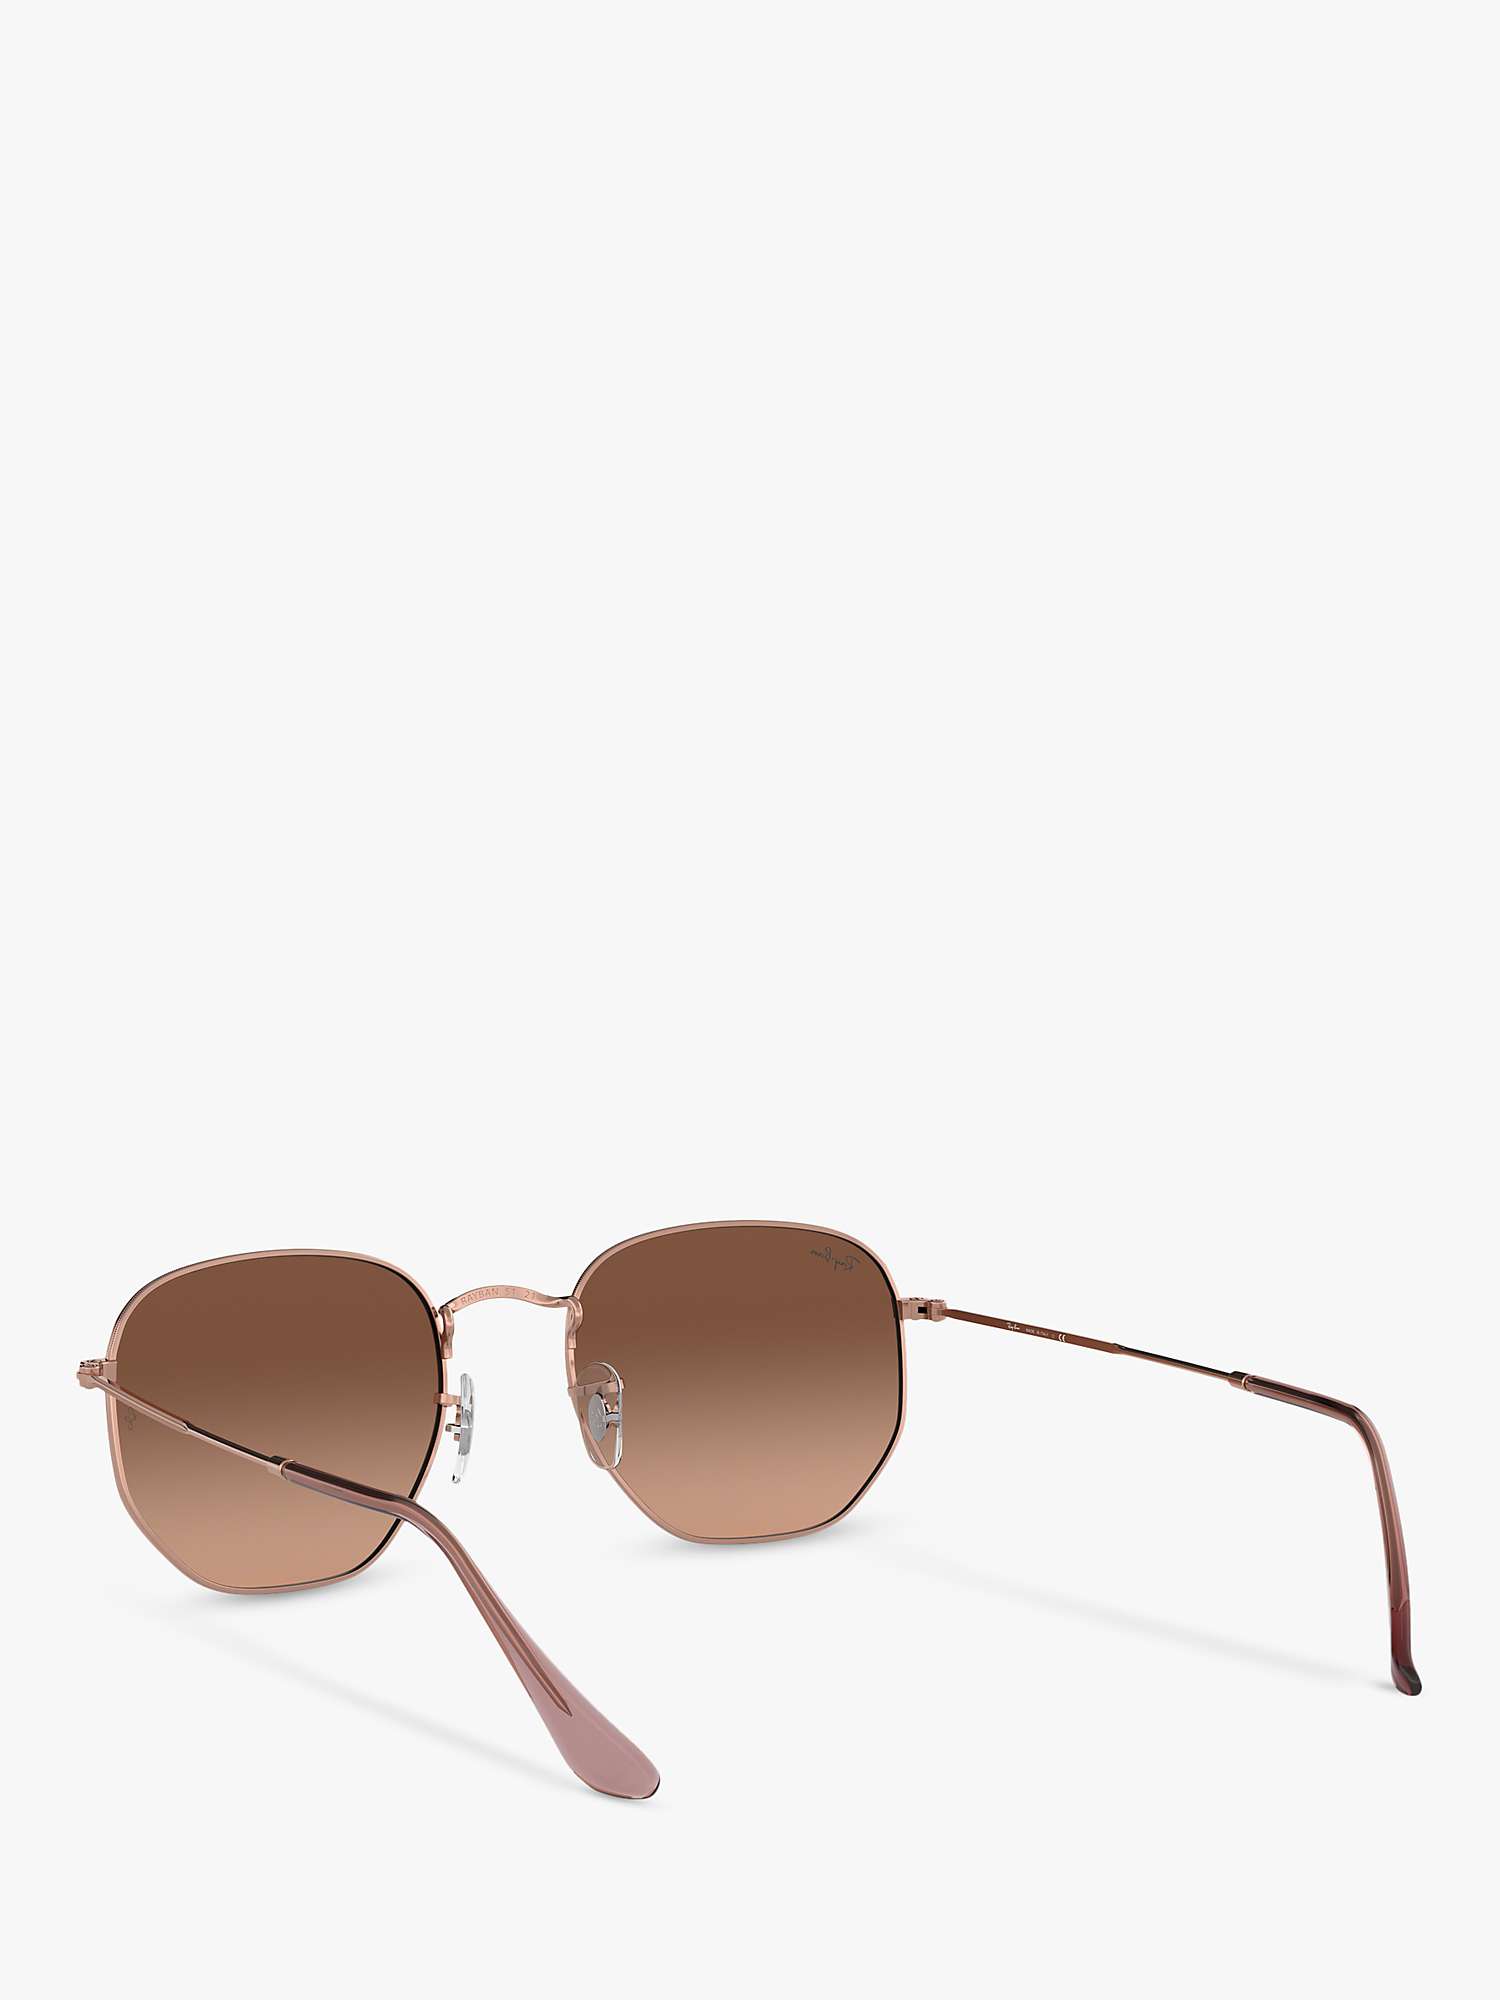 Buy Ray-Ban RB3548N Unisex Hexagonal Sunglasses, Copper/Brown Gradient Online at johnlewis.com